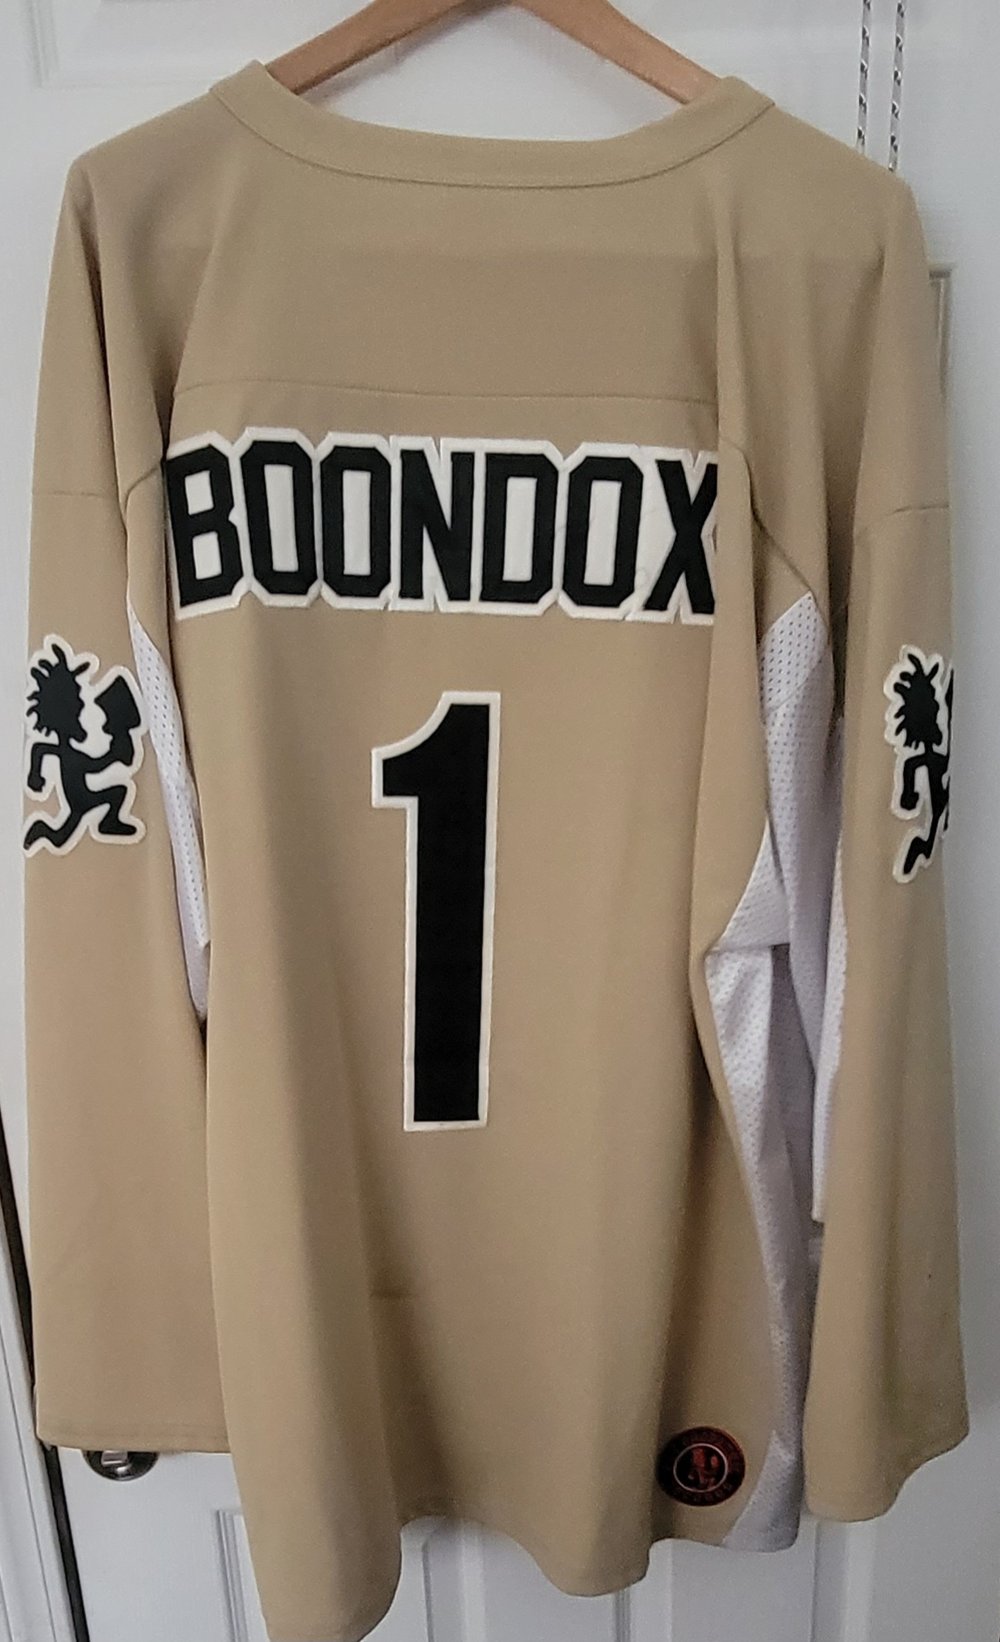 Boondox 2xl football jersey